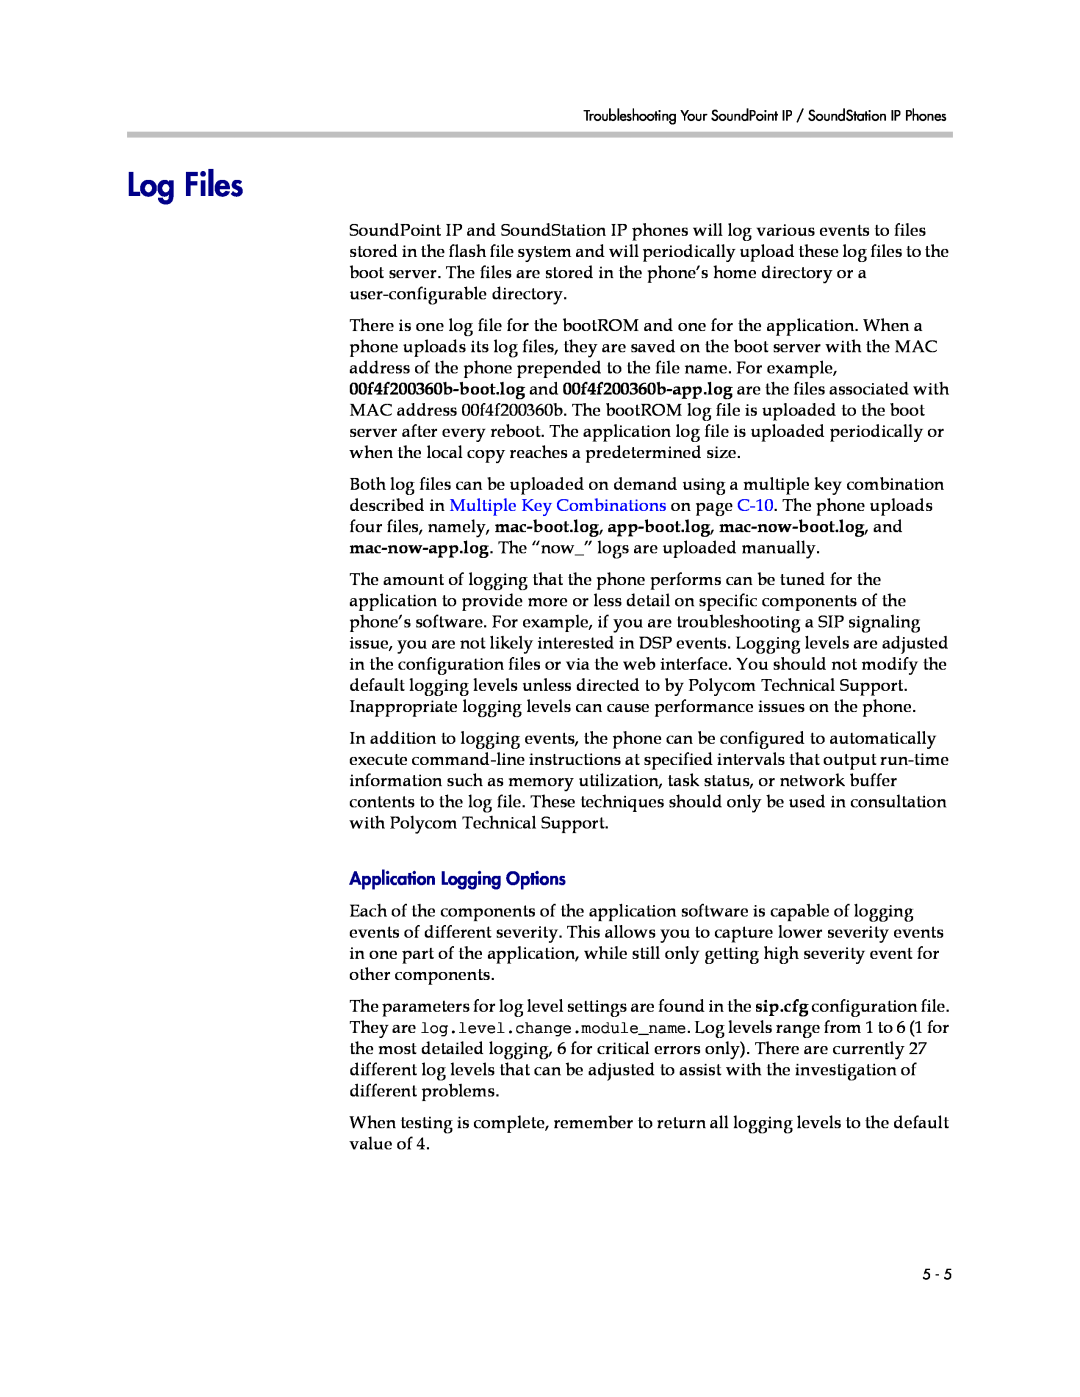 Polycom SIP 3.1 manual Log Files, Application Logging Options 